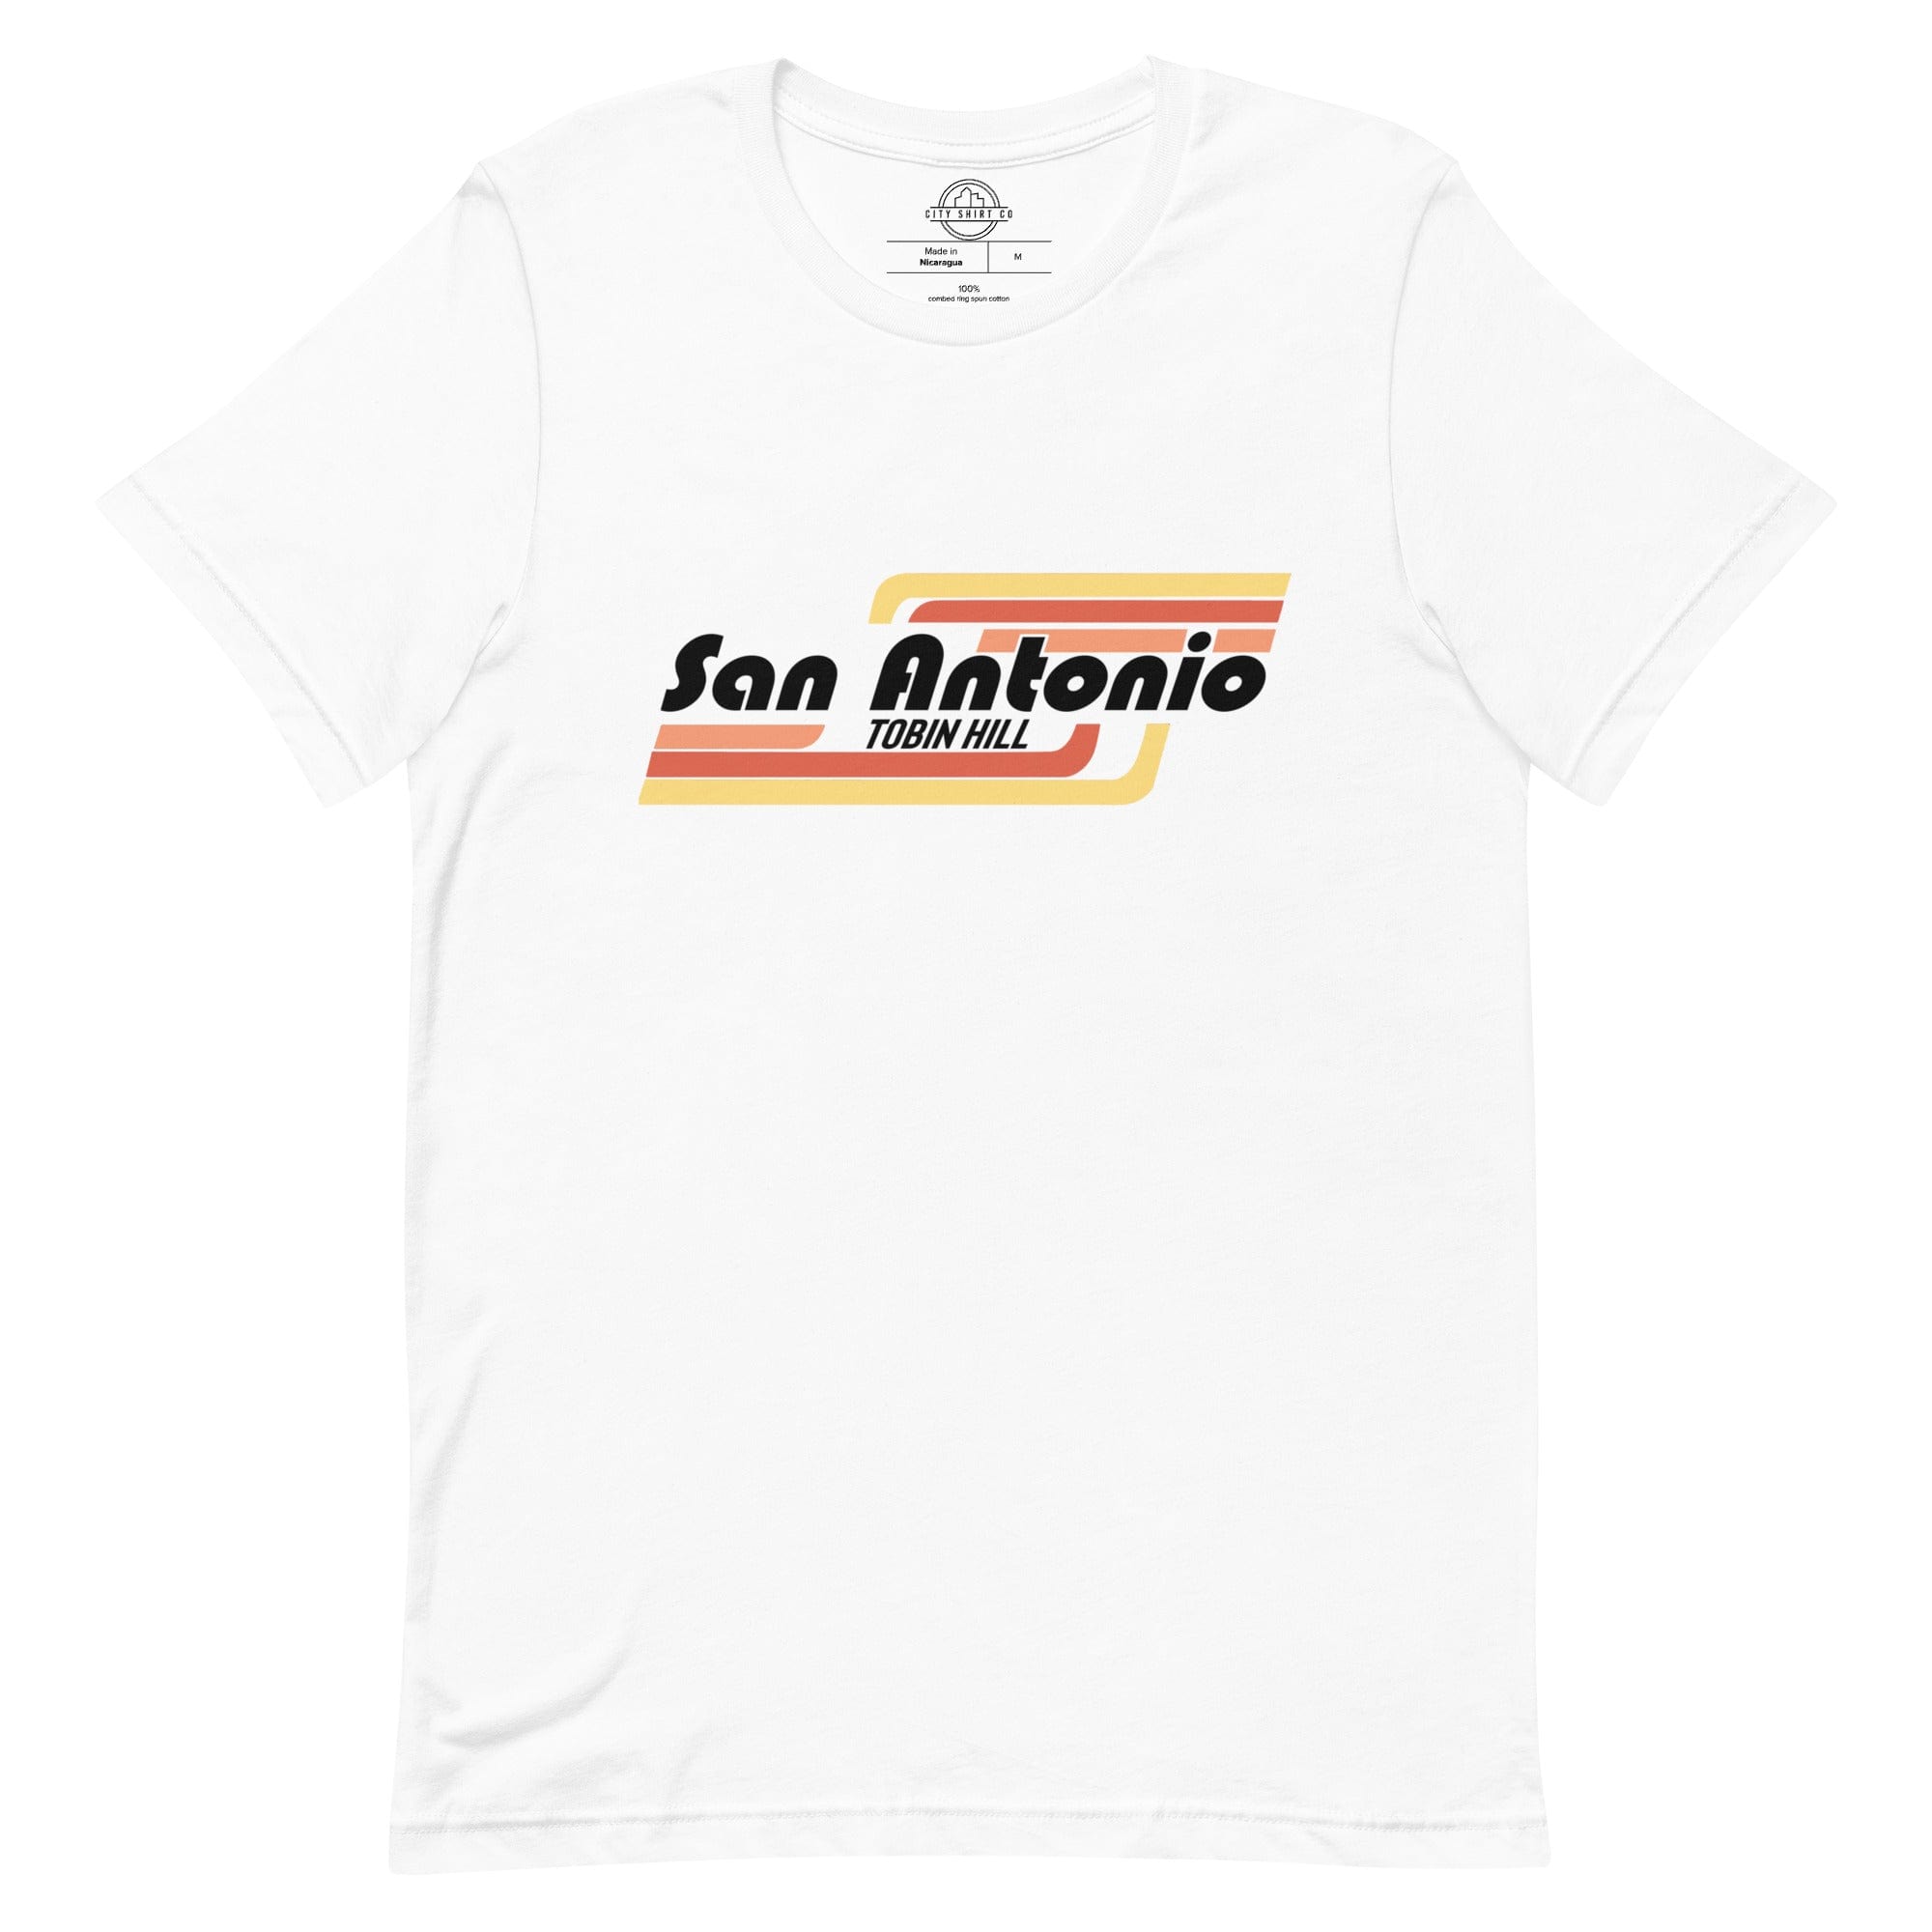 City Shirt Co San Antonio | Tobin Hill Neighborhood T Shirt White / XS